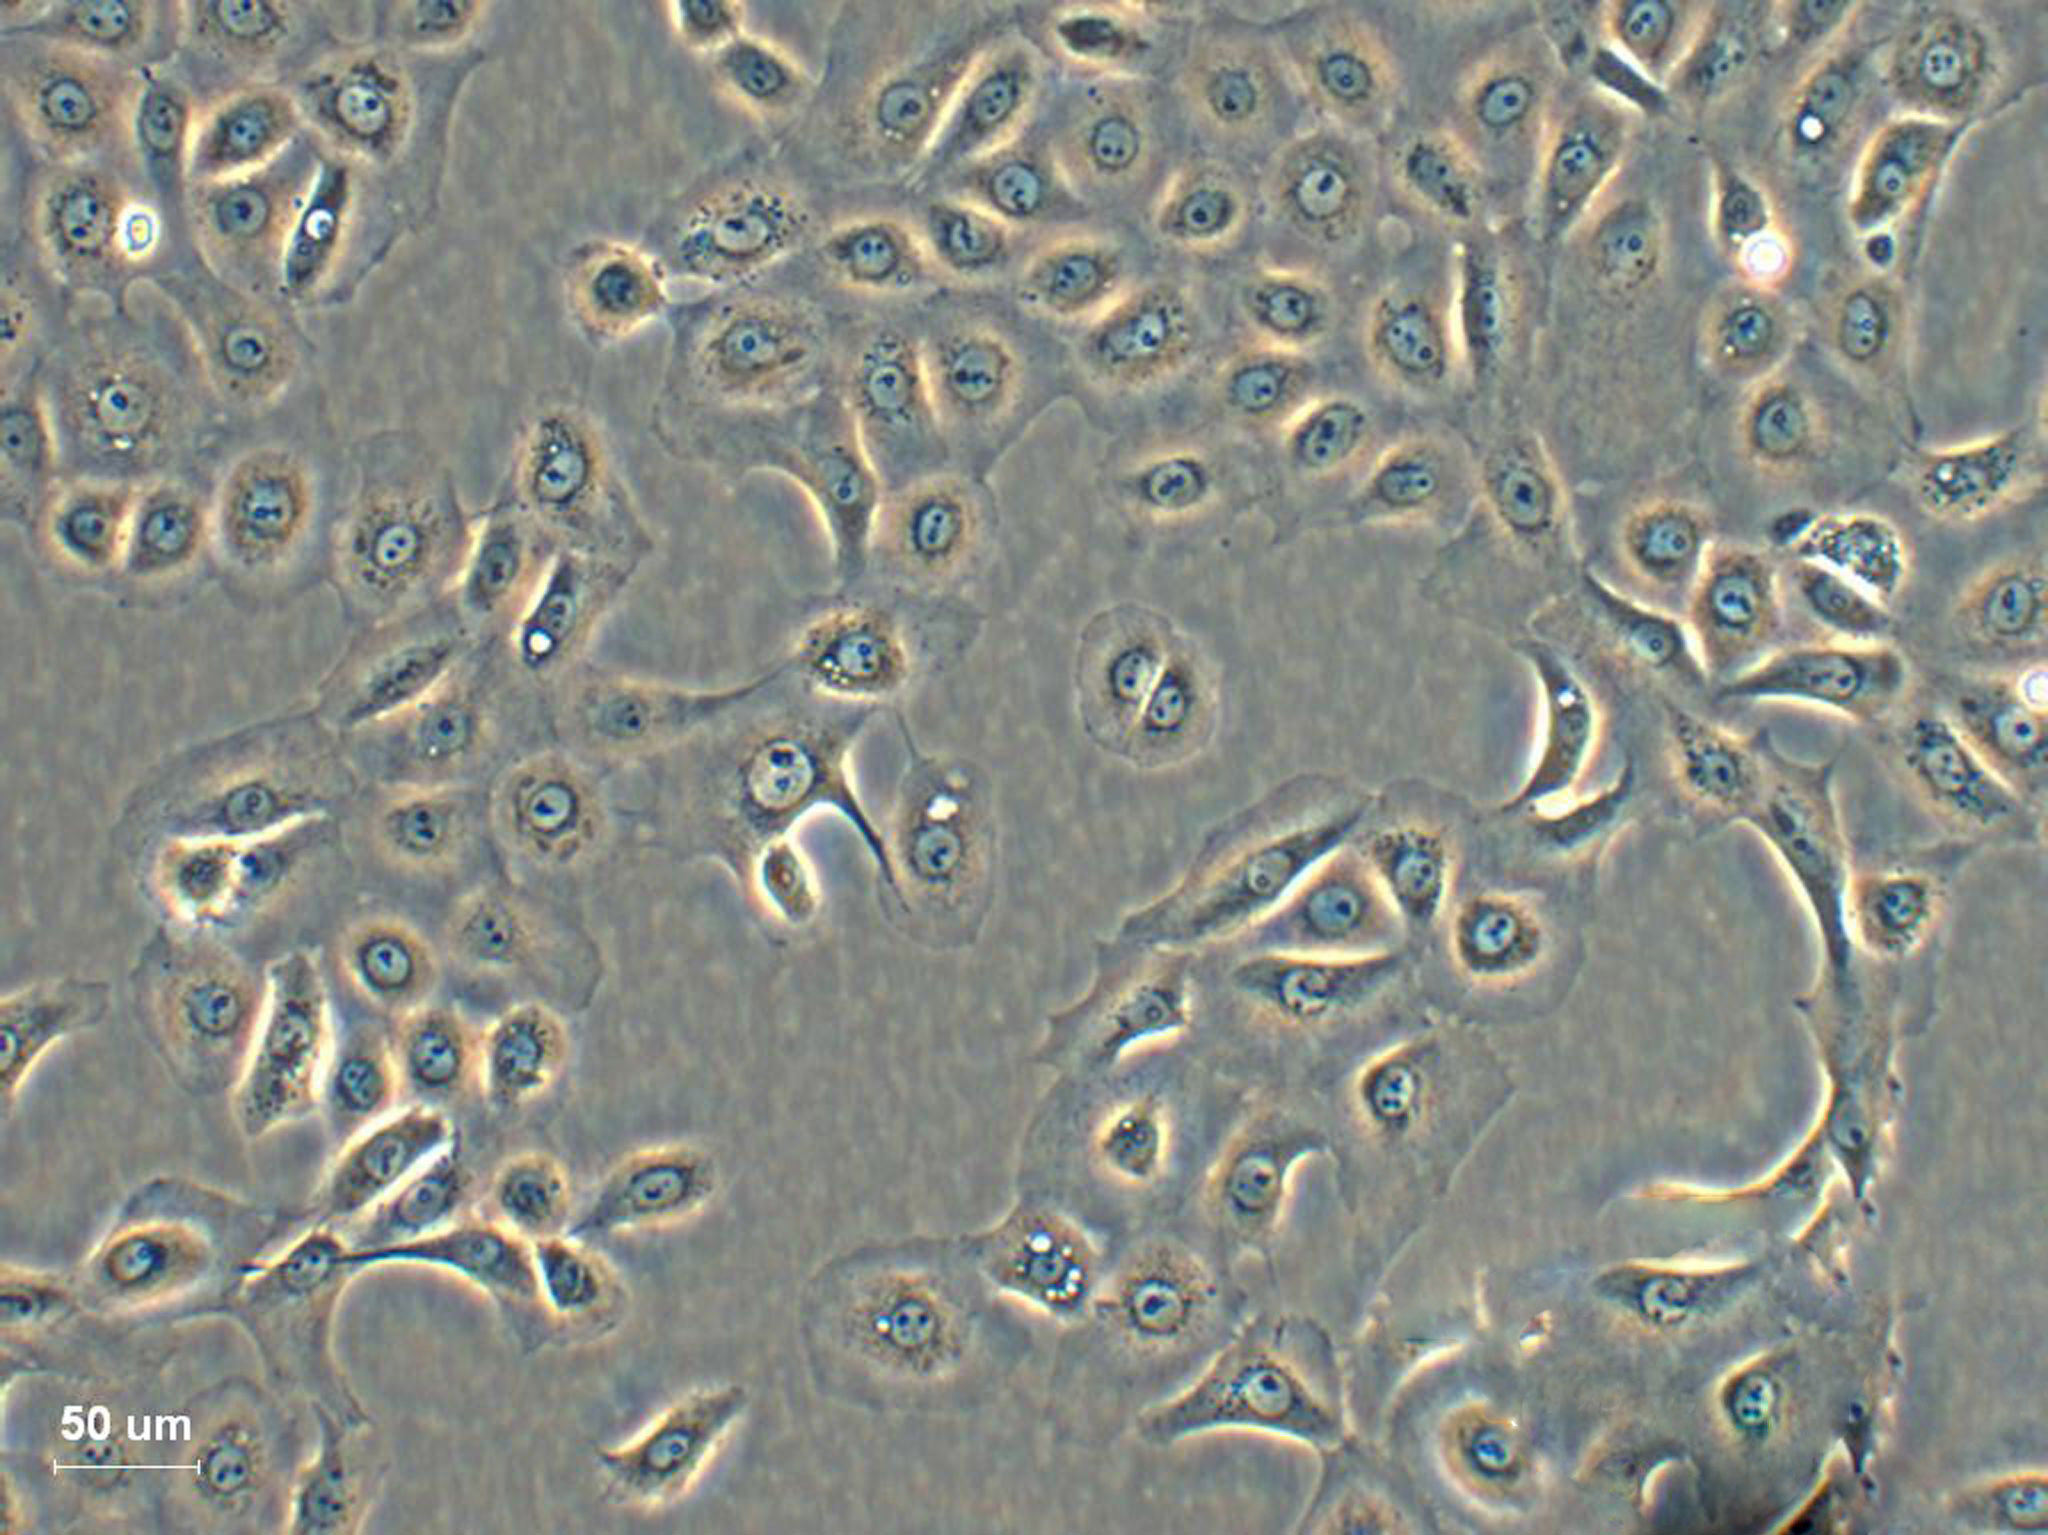 HEI193 epithelioid cells人神经鞘瘤细胞系